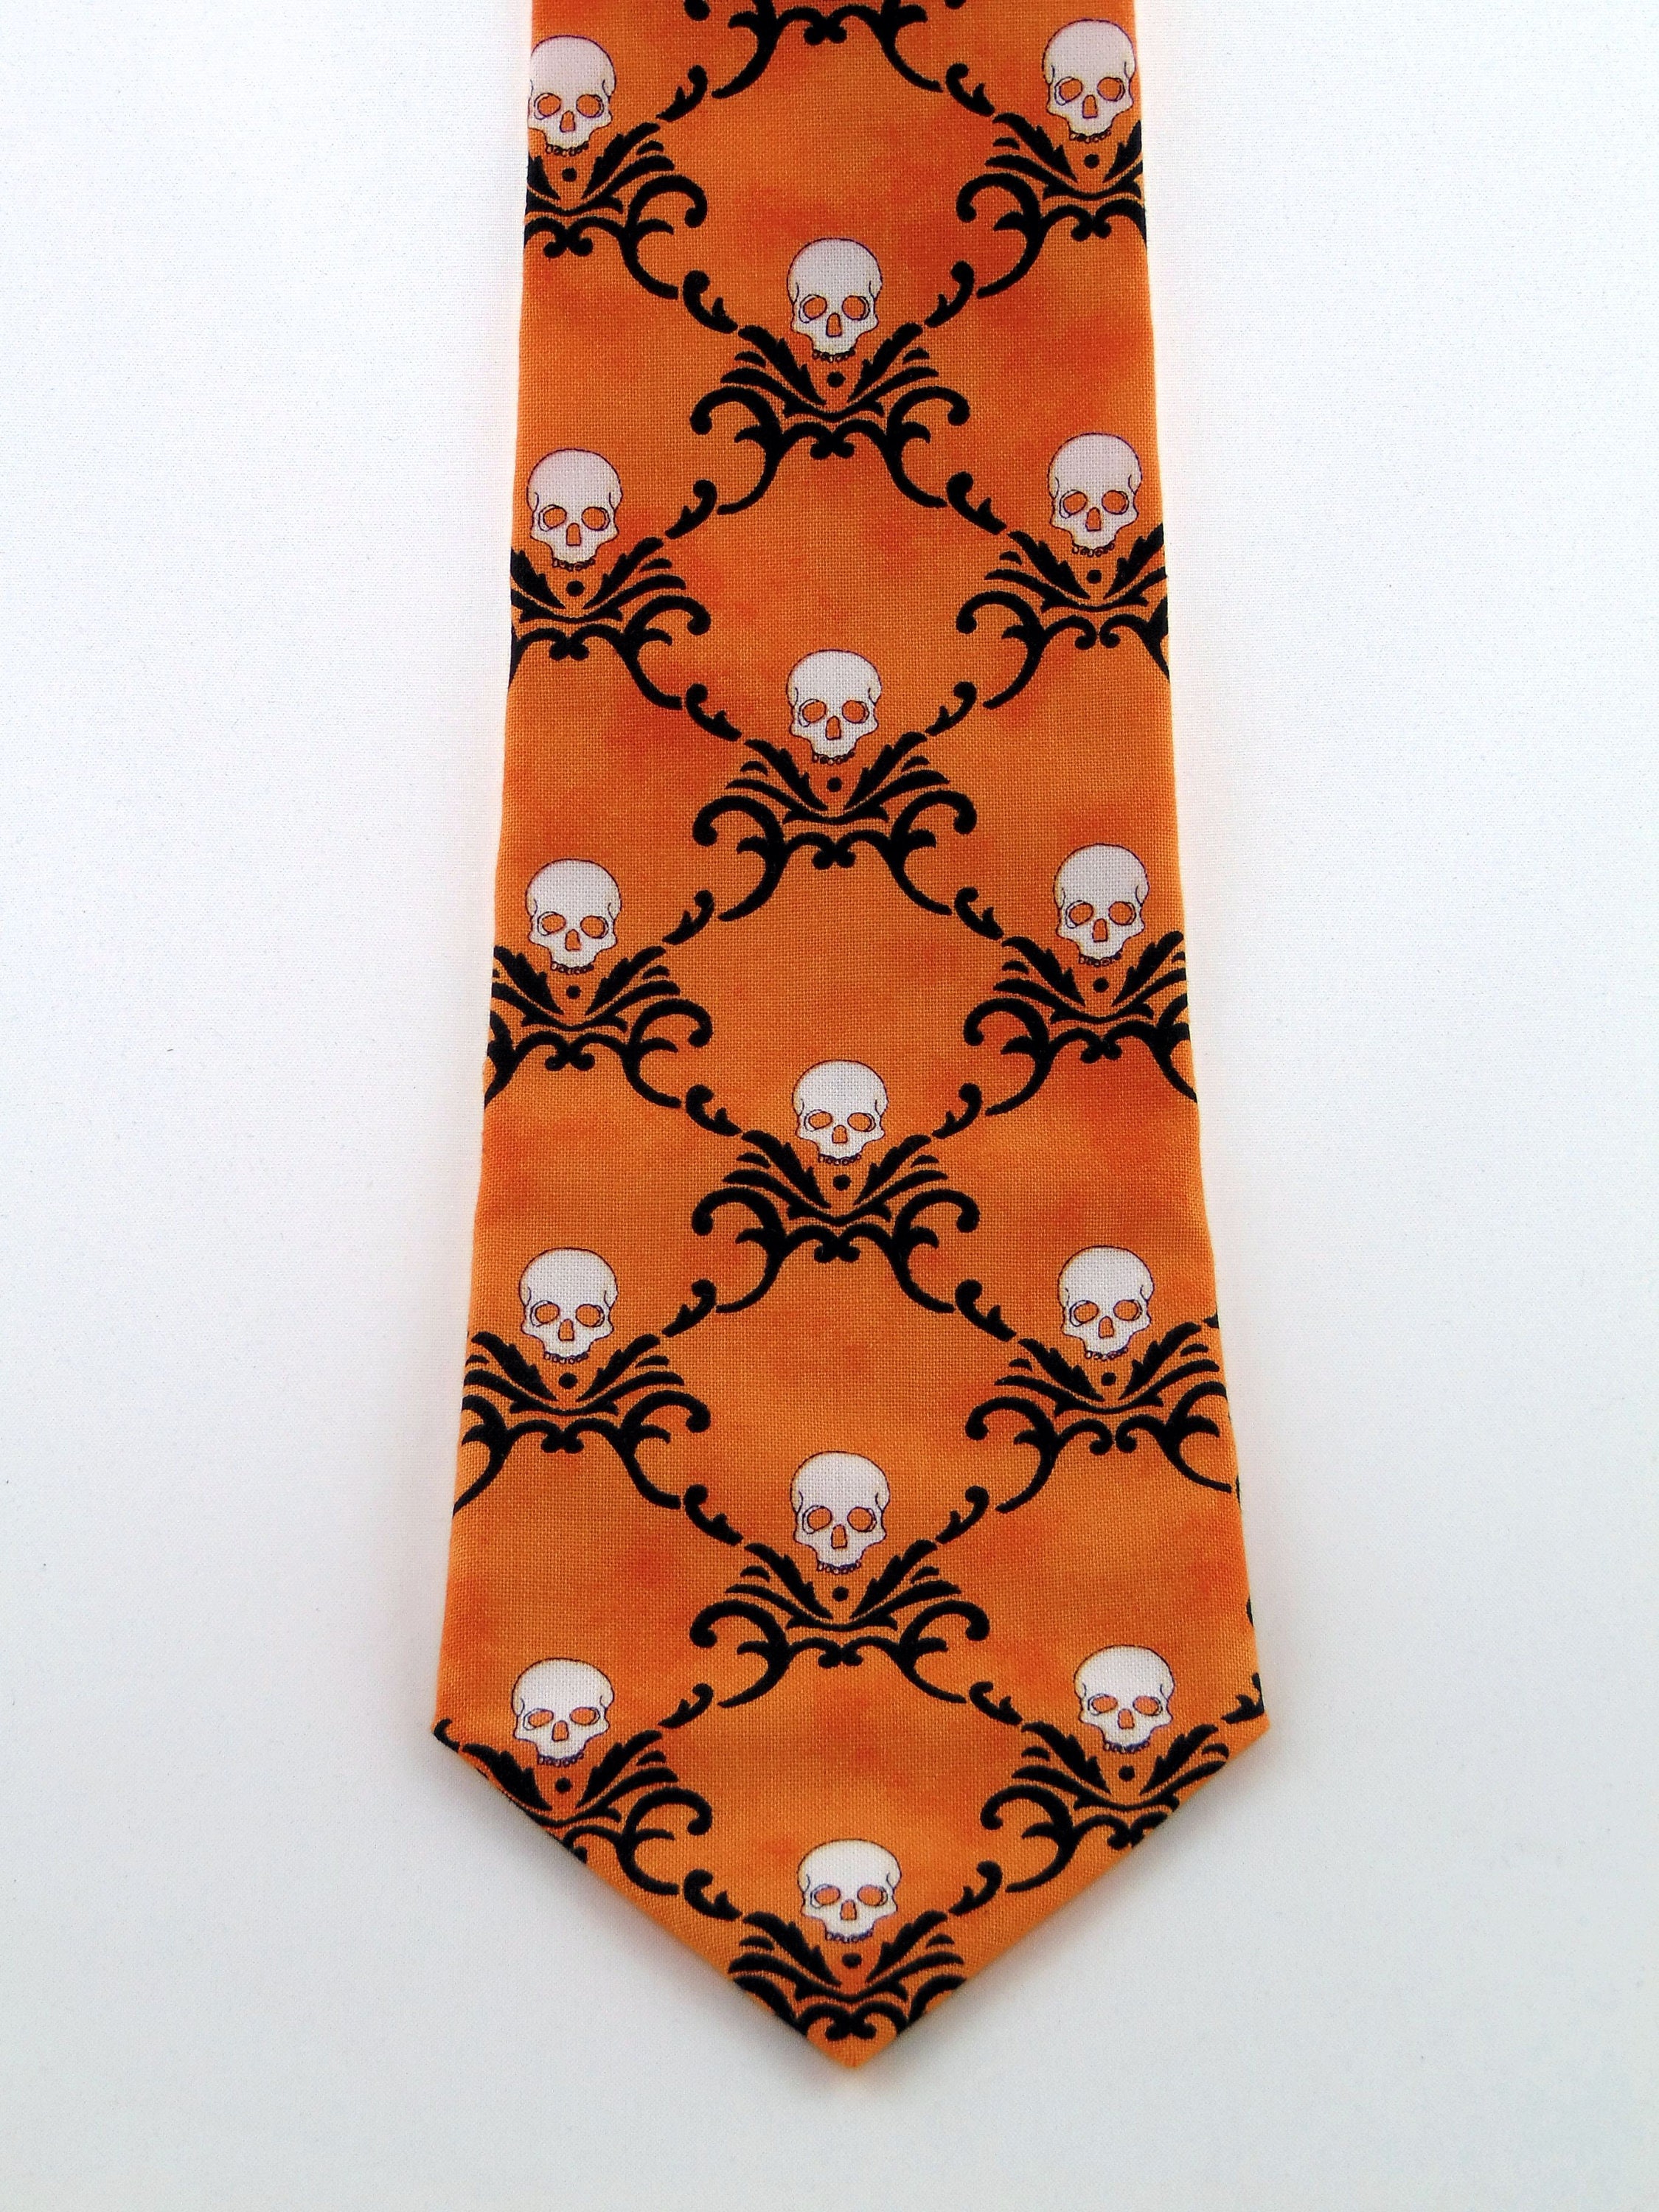 Skull Neck Tie – Halloween Necktie with Goth Tie Theme and Orange ...